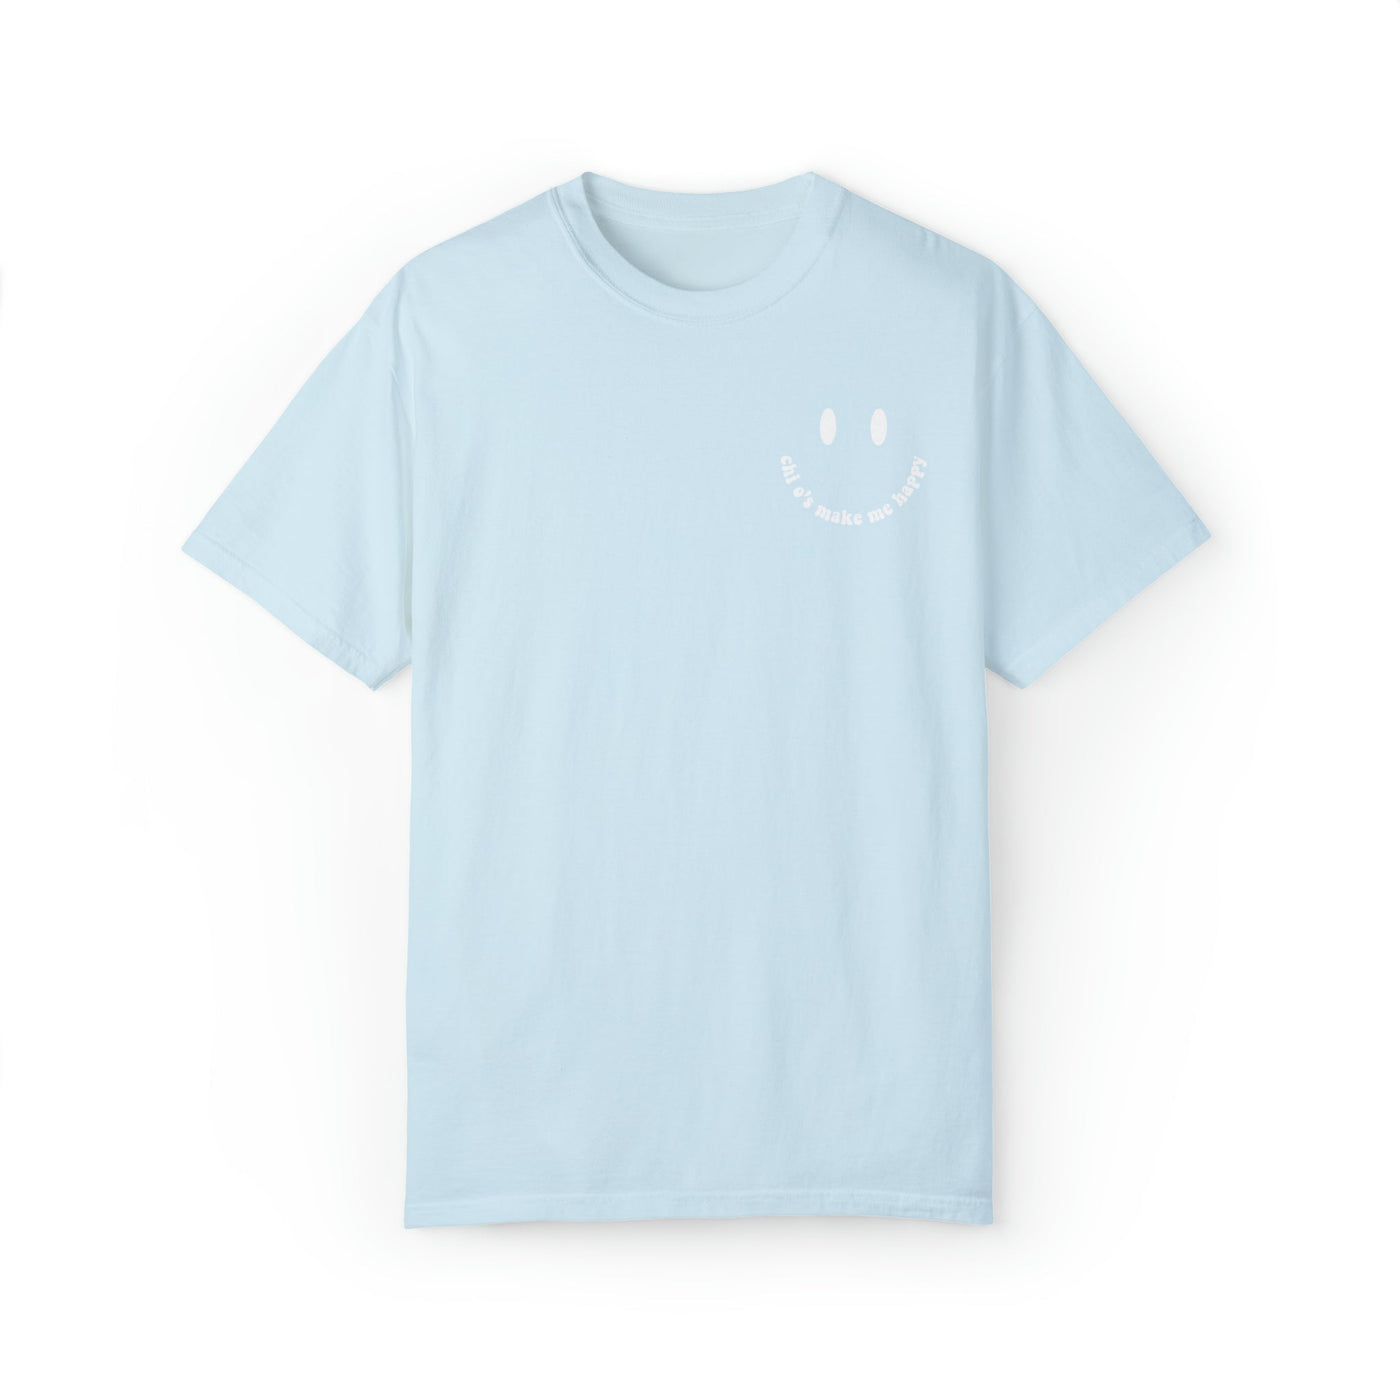 Chi Omega's Make Me Happy Sorority Comfy T-shirt